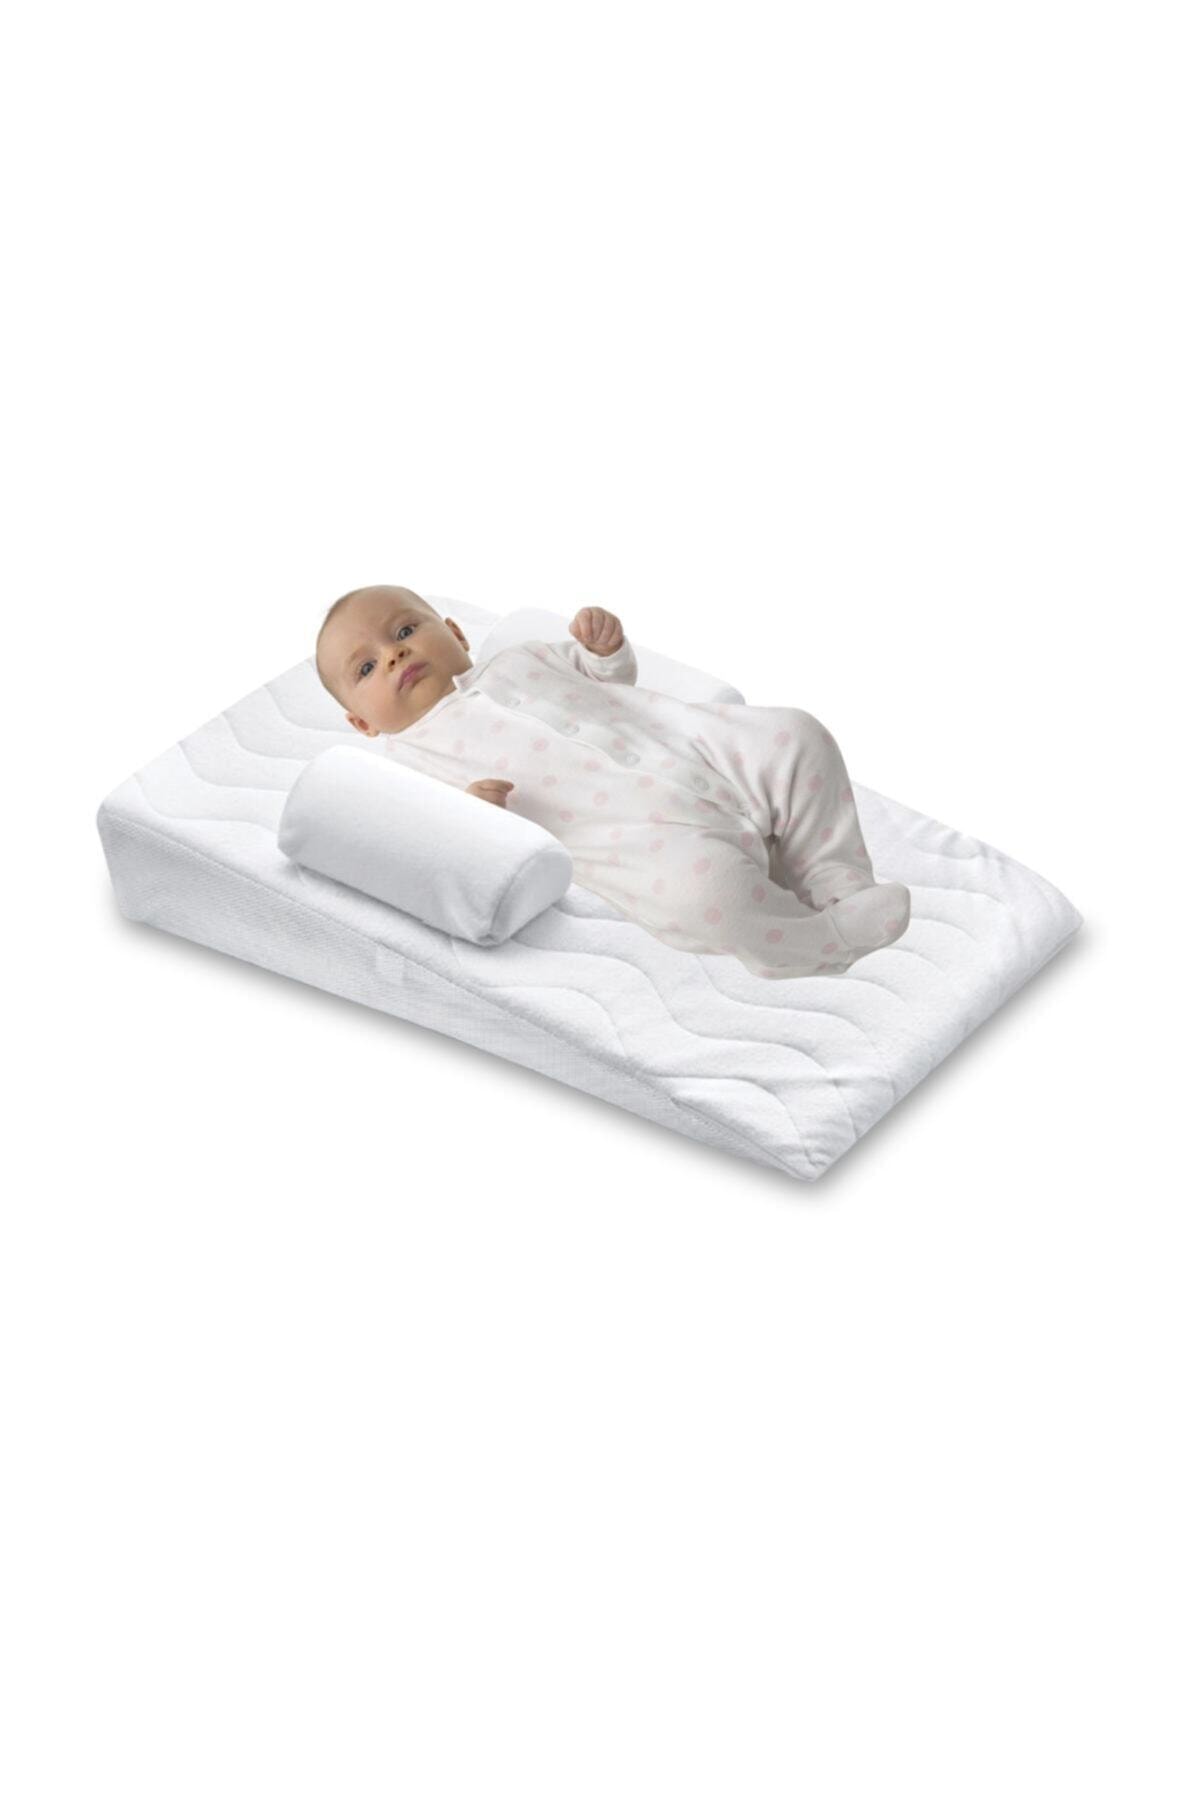 BABY BED Comfort Bebek Reflü Yatak